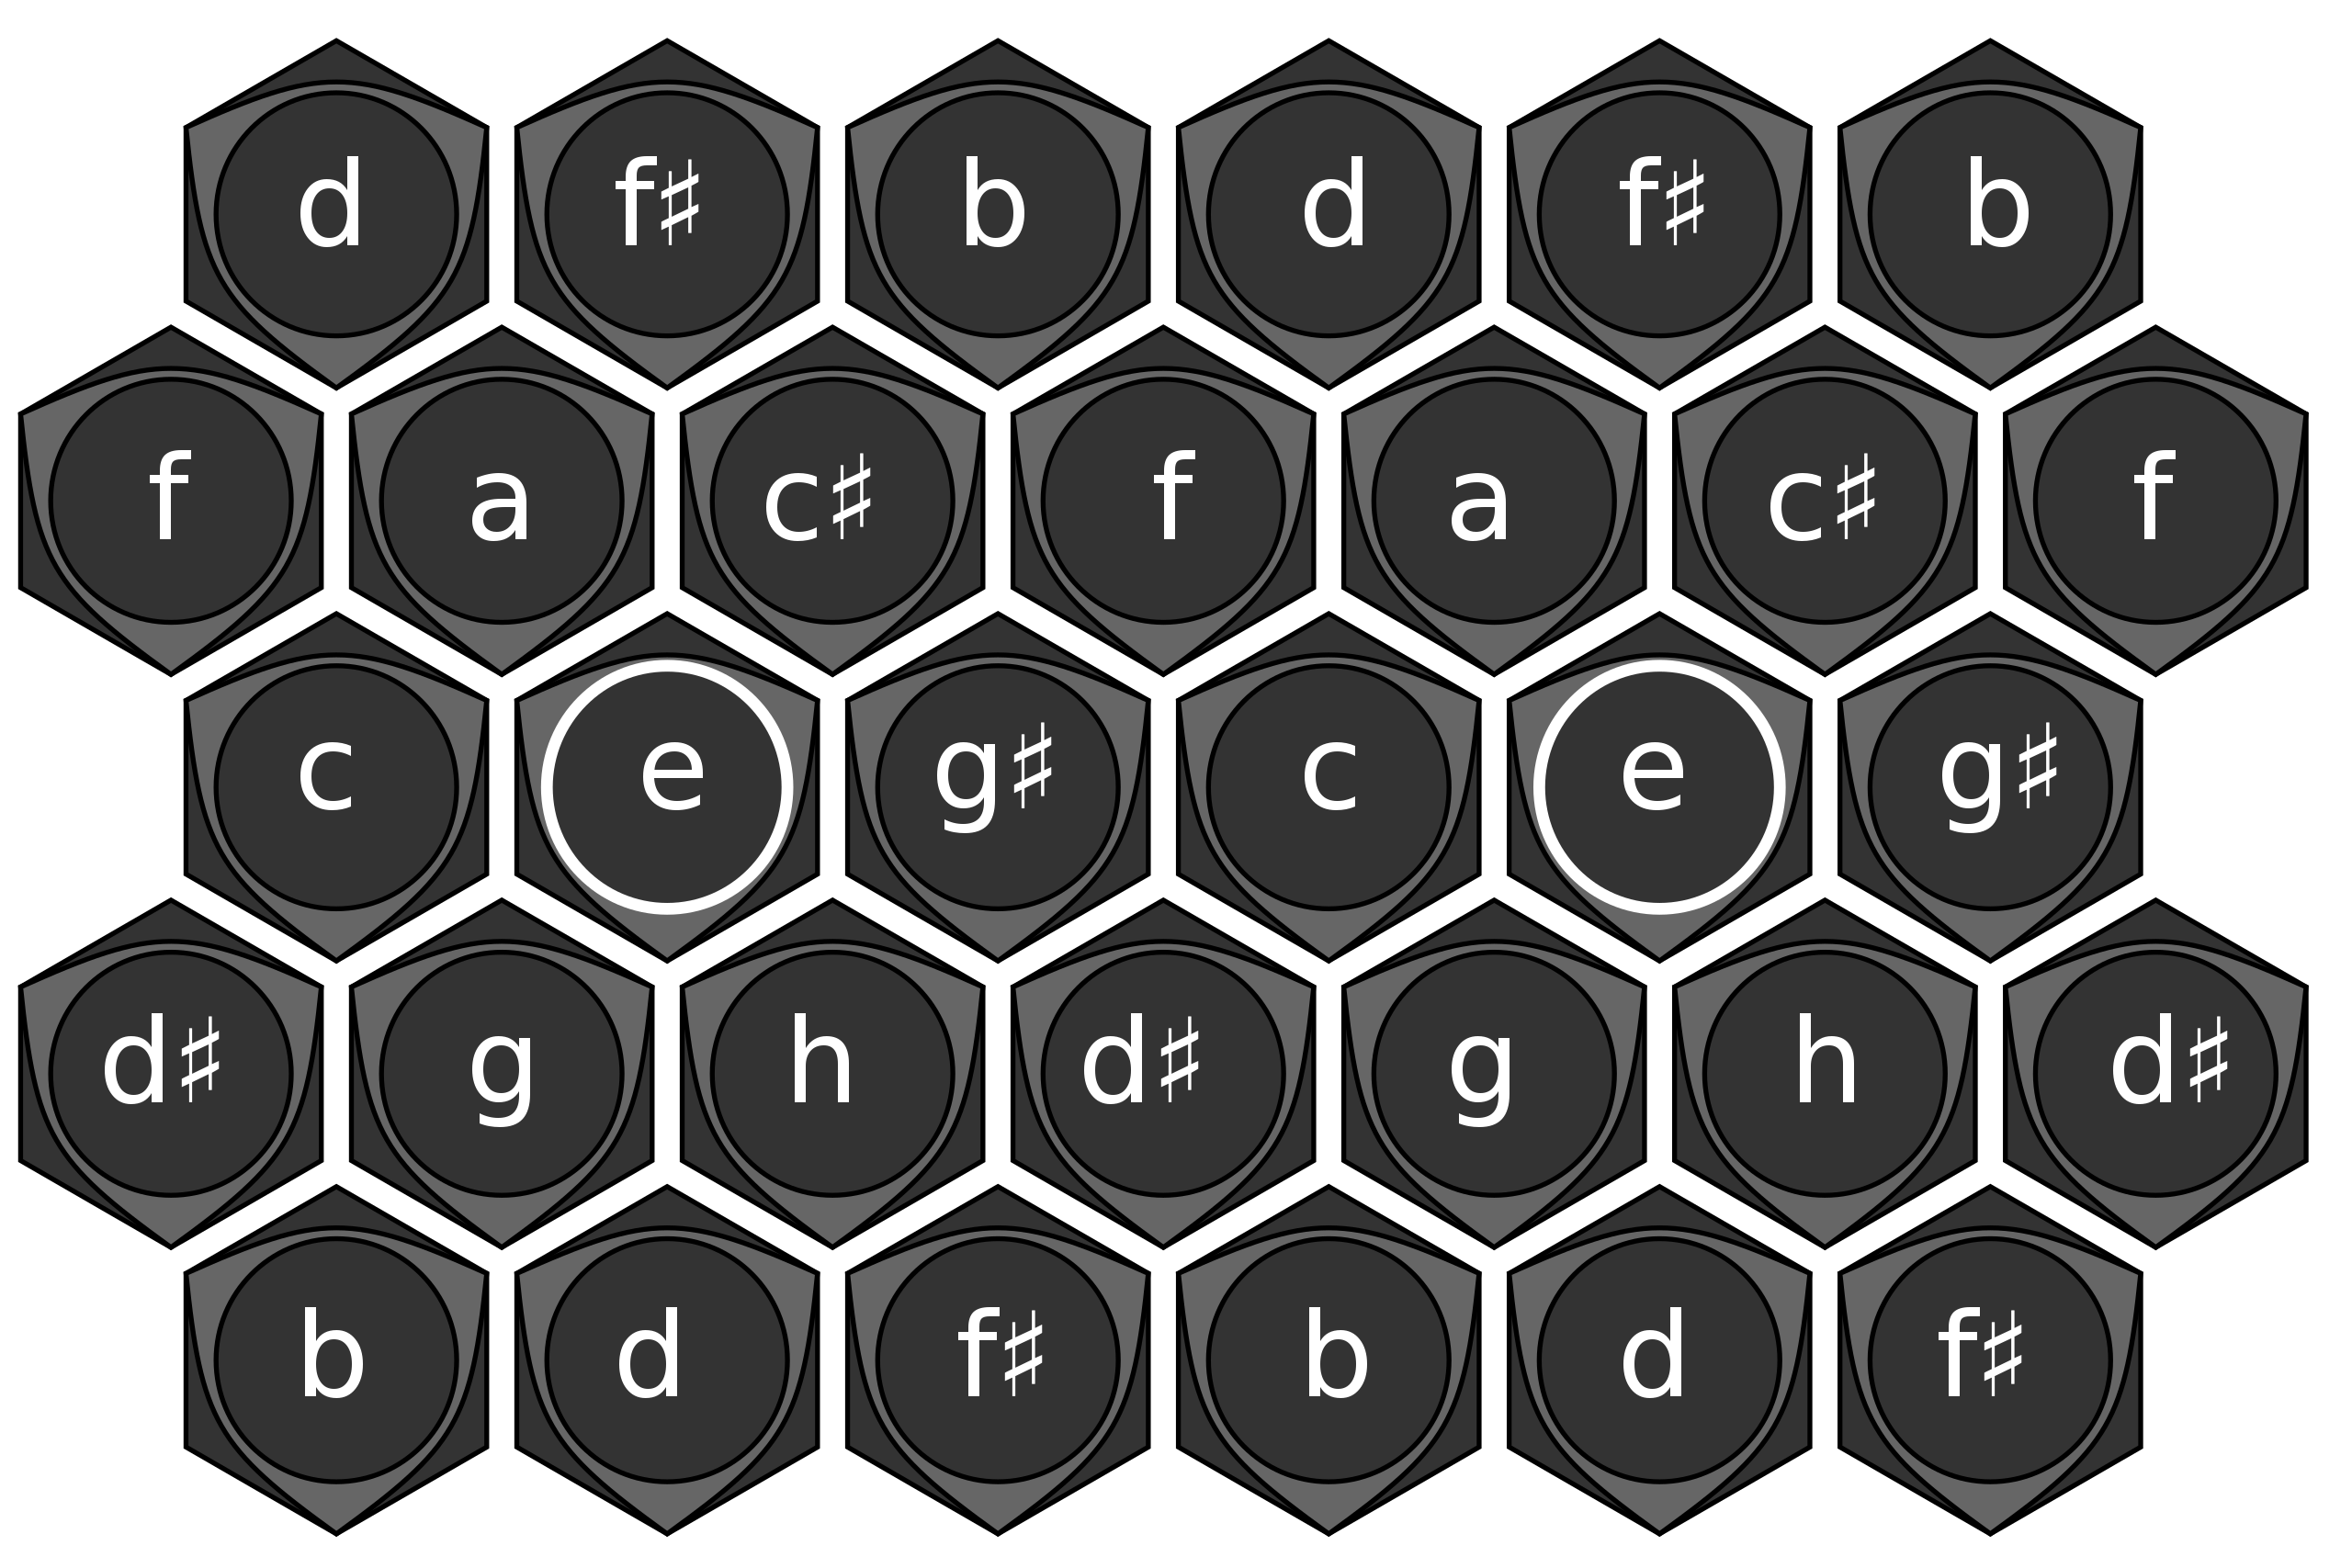 2560px-Harmonetta_keyboard_layout.svg.png